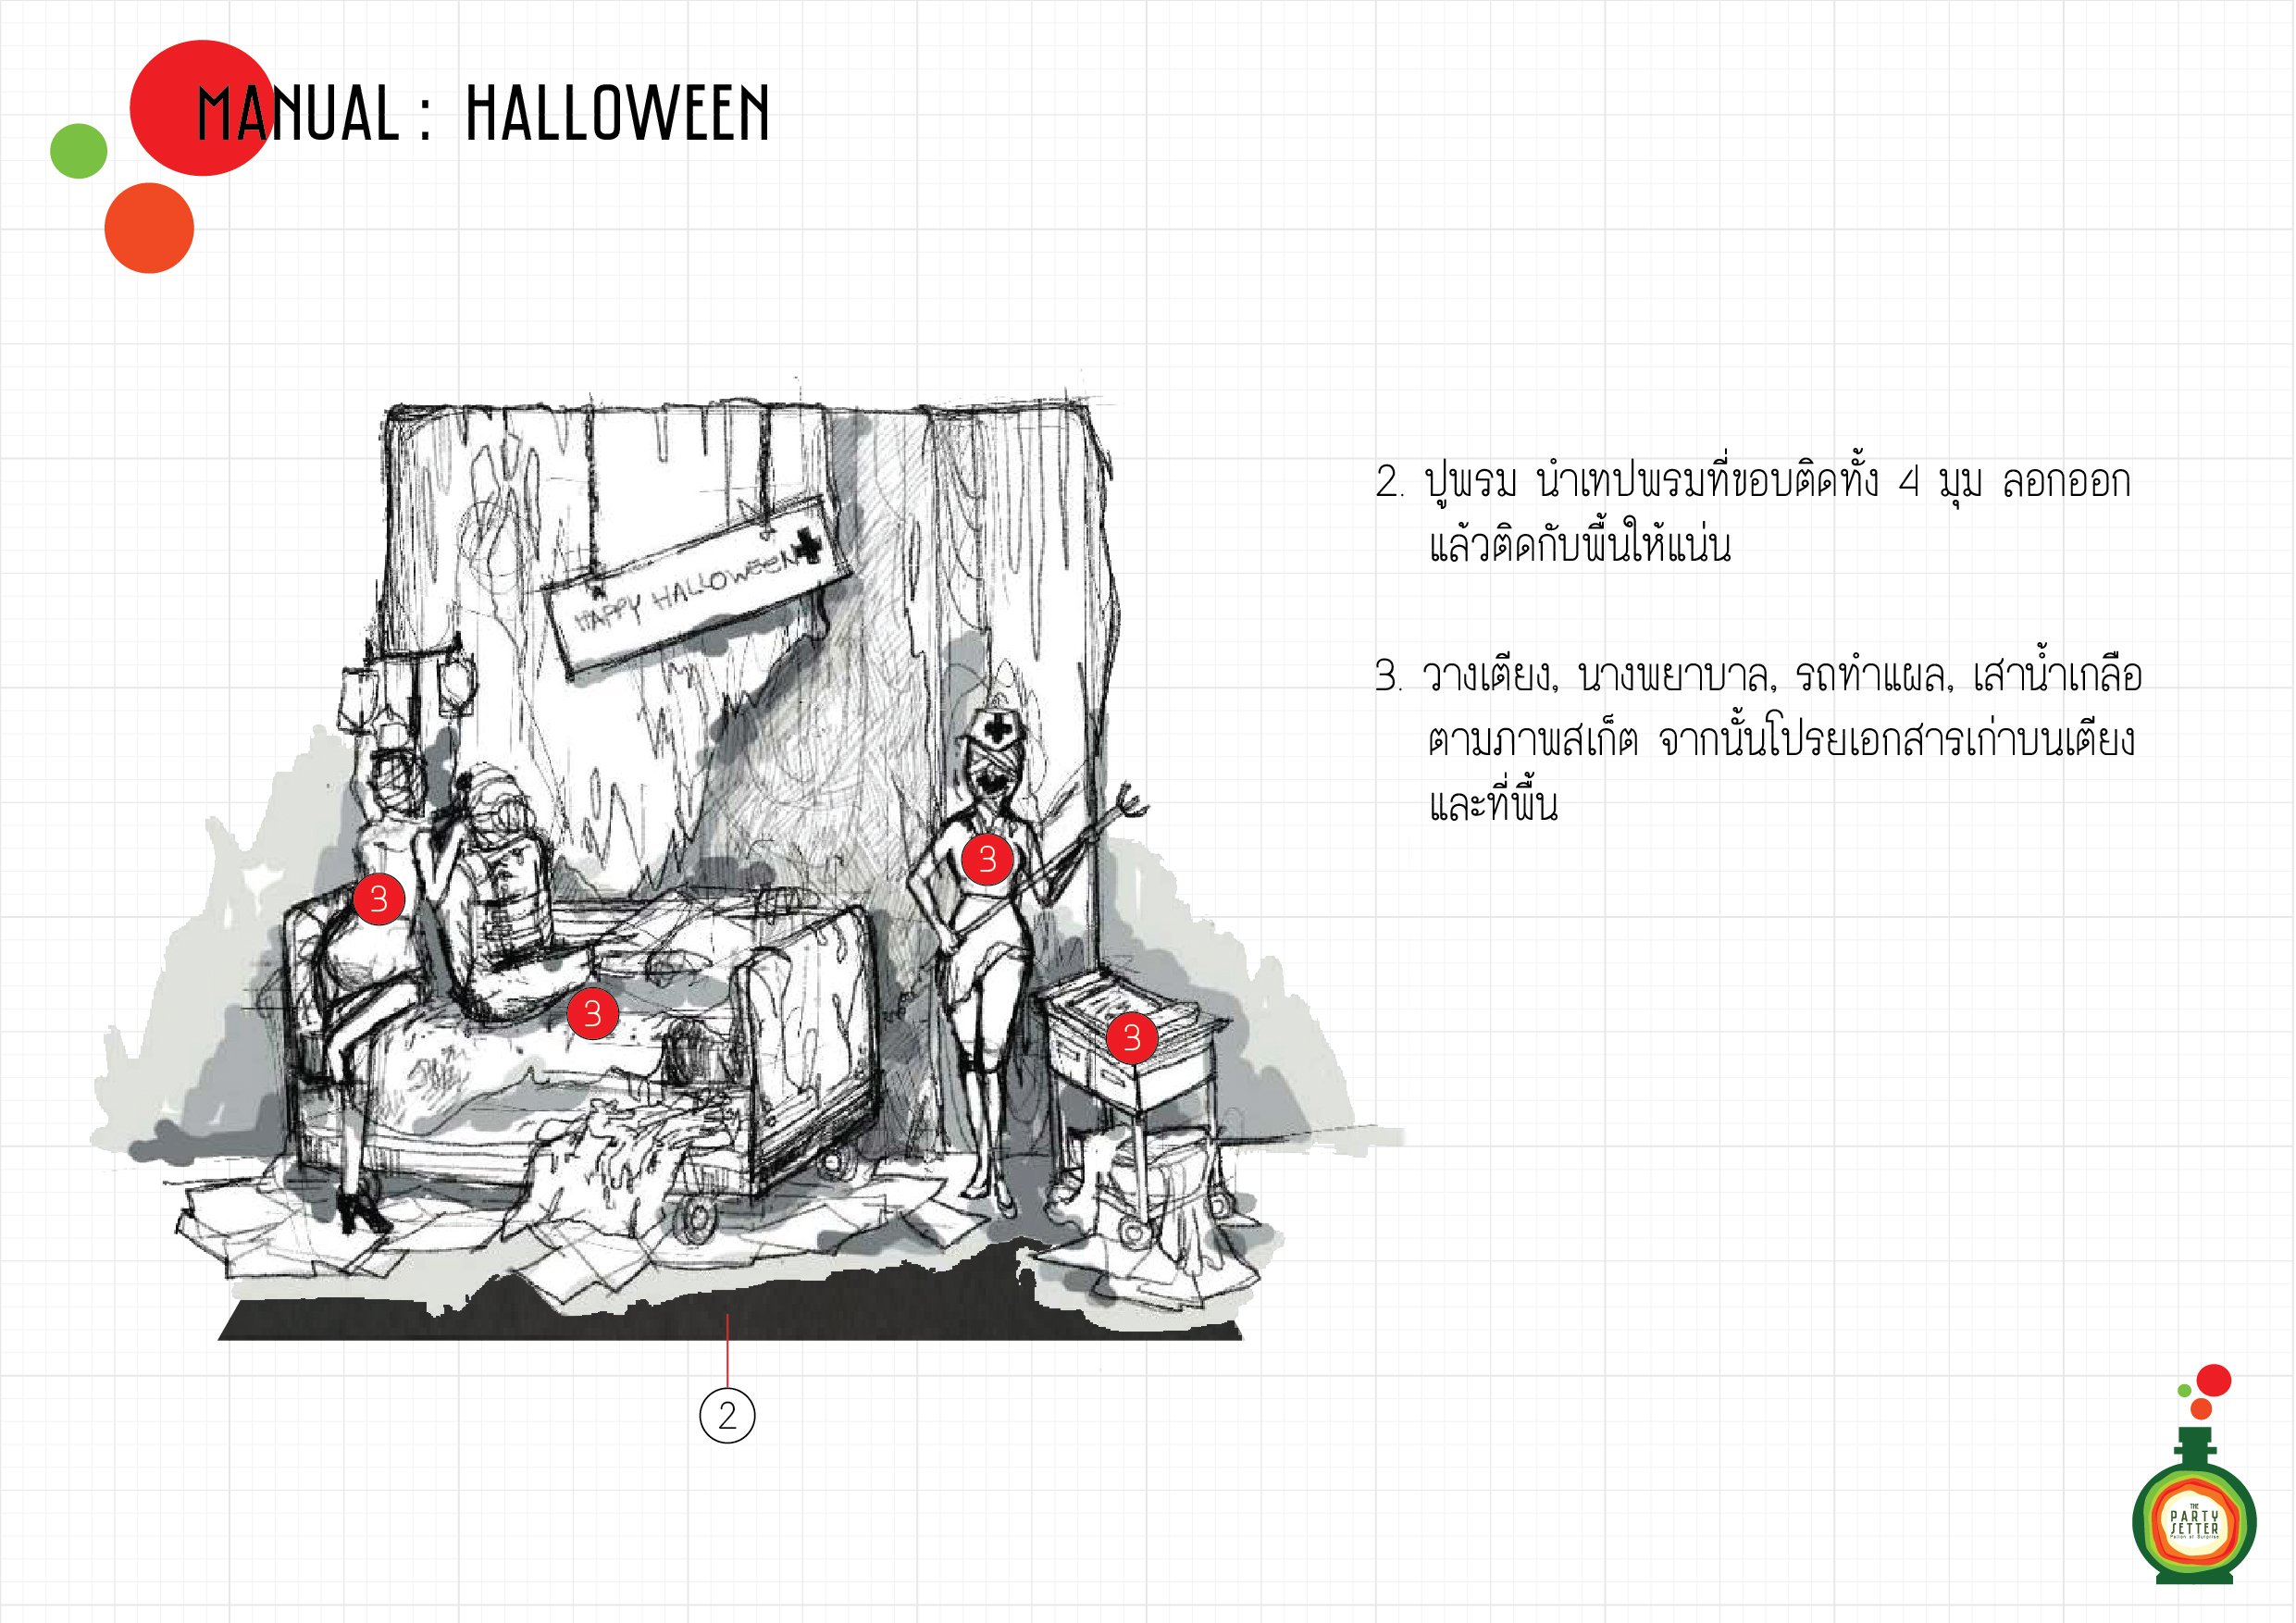 Manual_Halloween_14-02-01.jpg